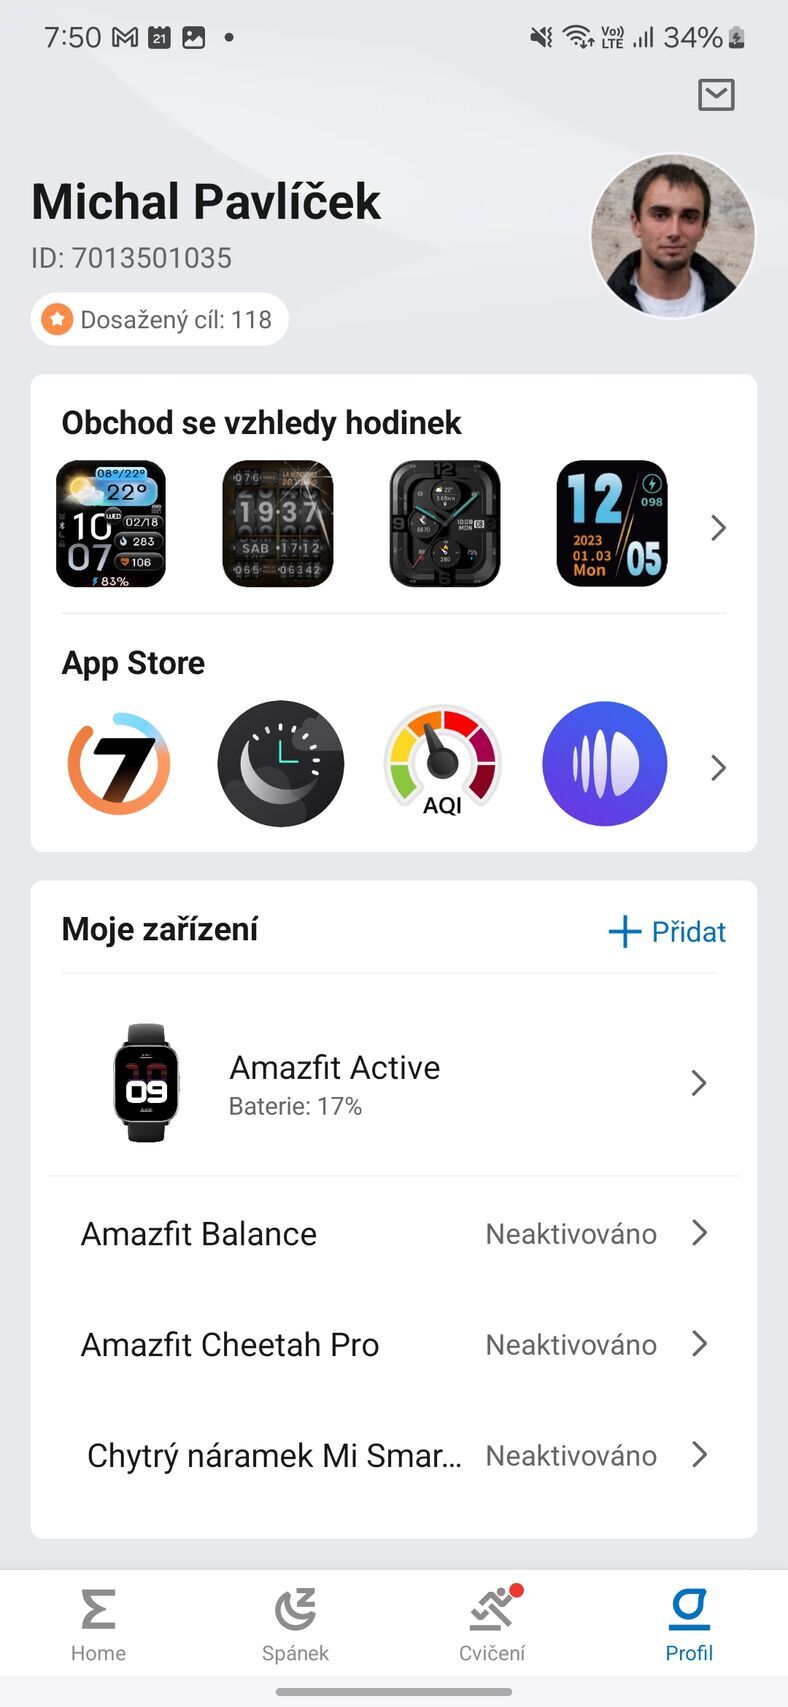 Amazfit Active